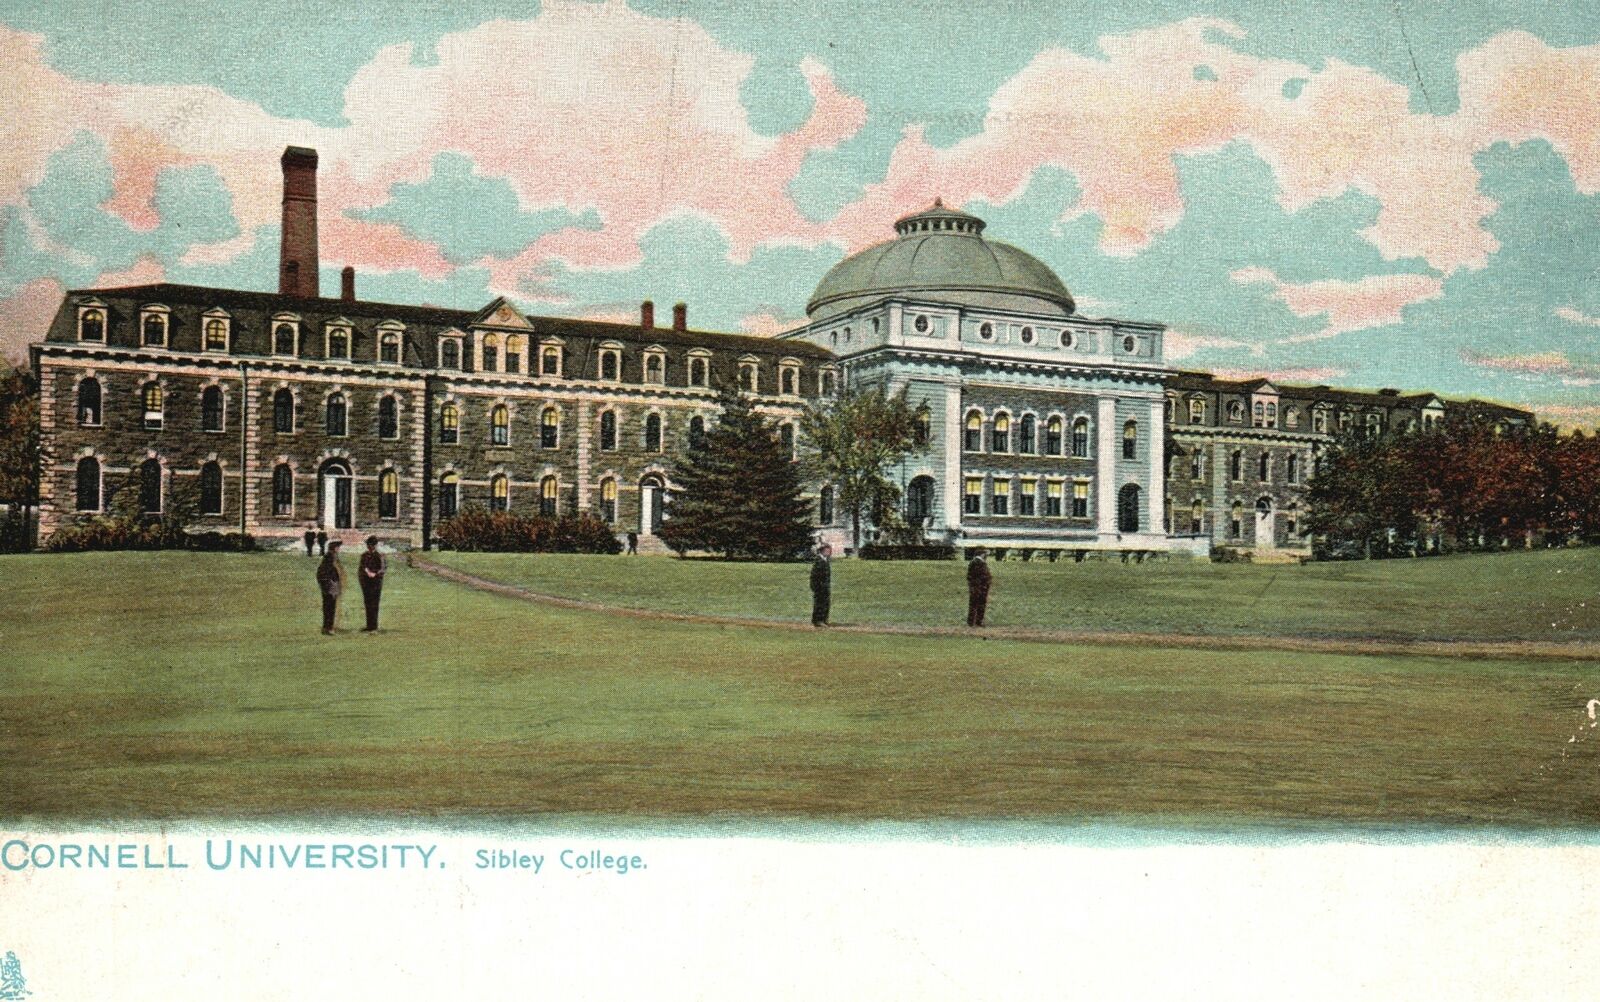 CORNELL UNIVERSITY Sibley College Ithaca New York NY Vintage Postcard c1900